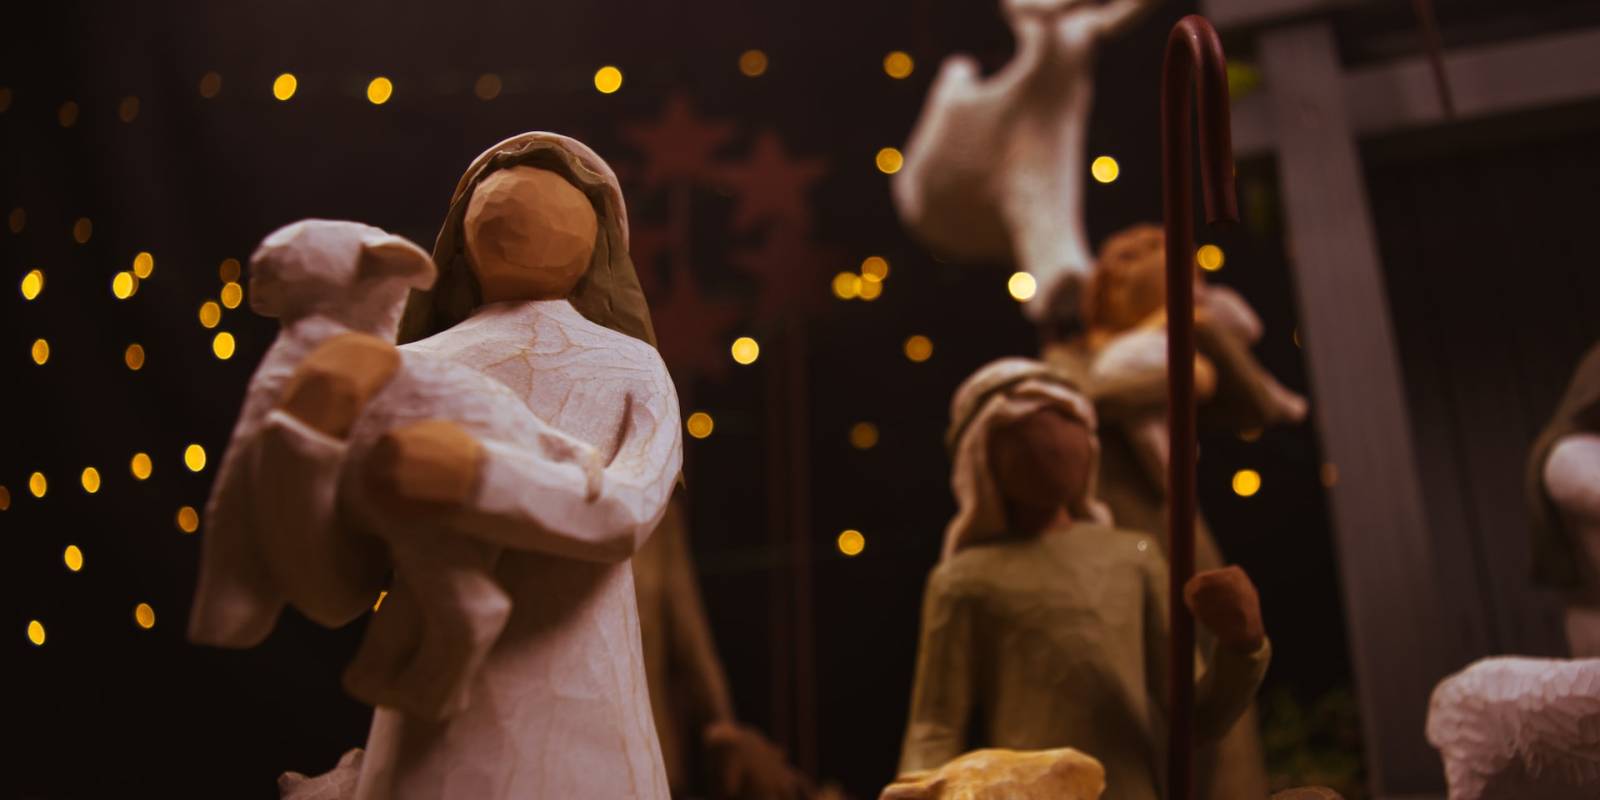 Figurines depicting the Nativity scene